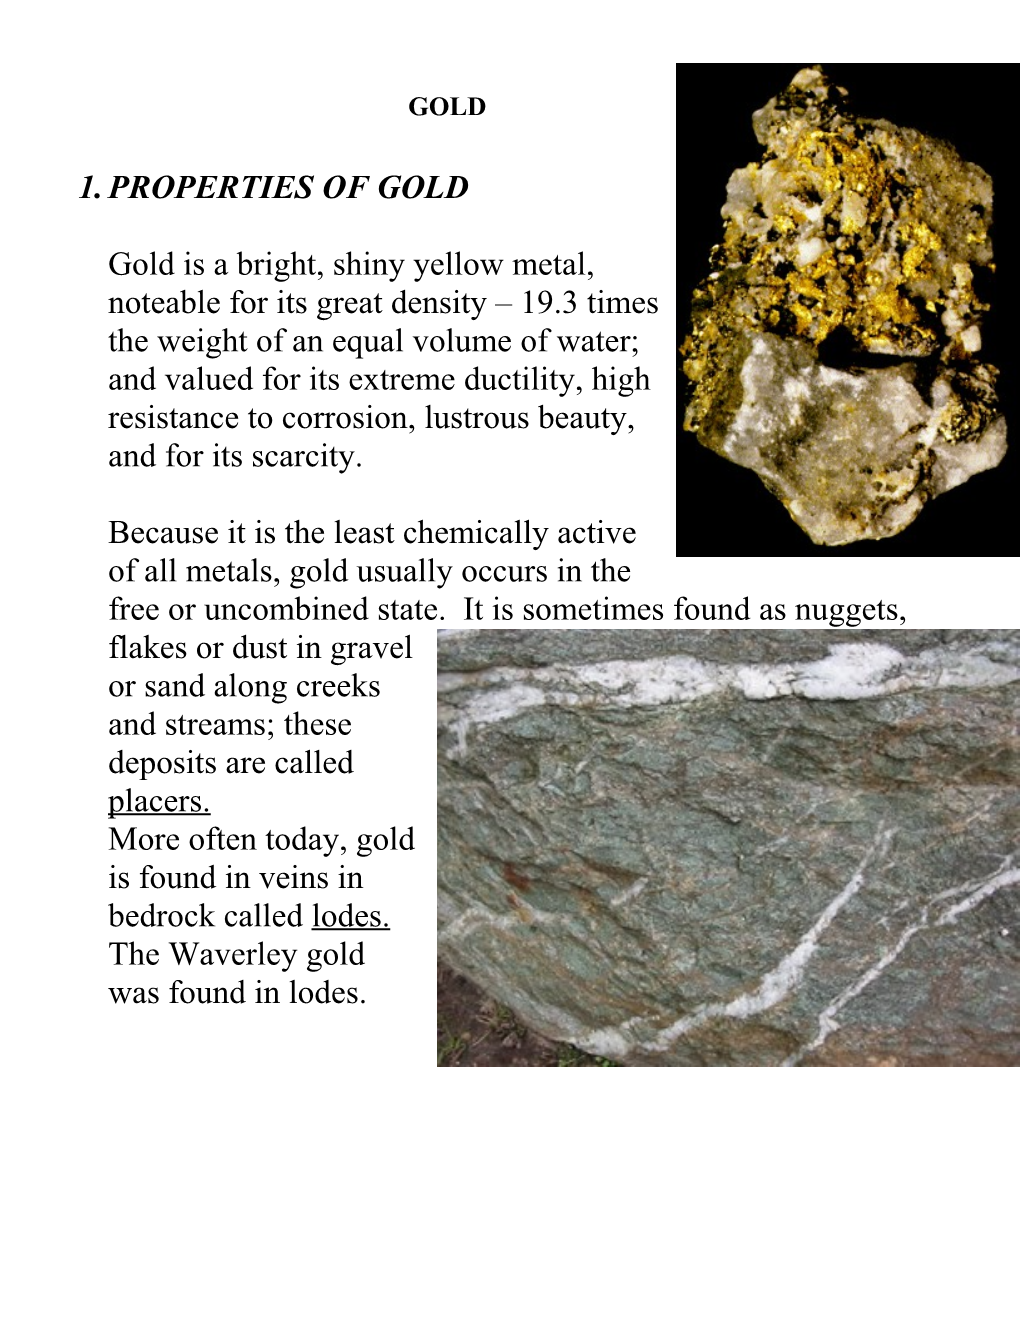 1. Properties of Gold